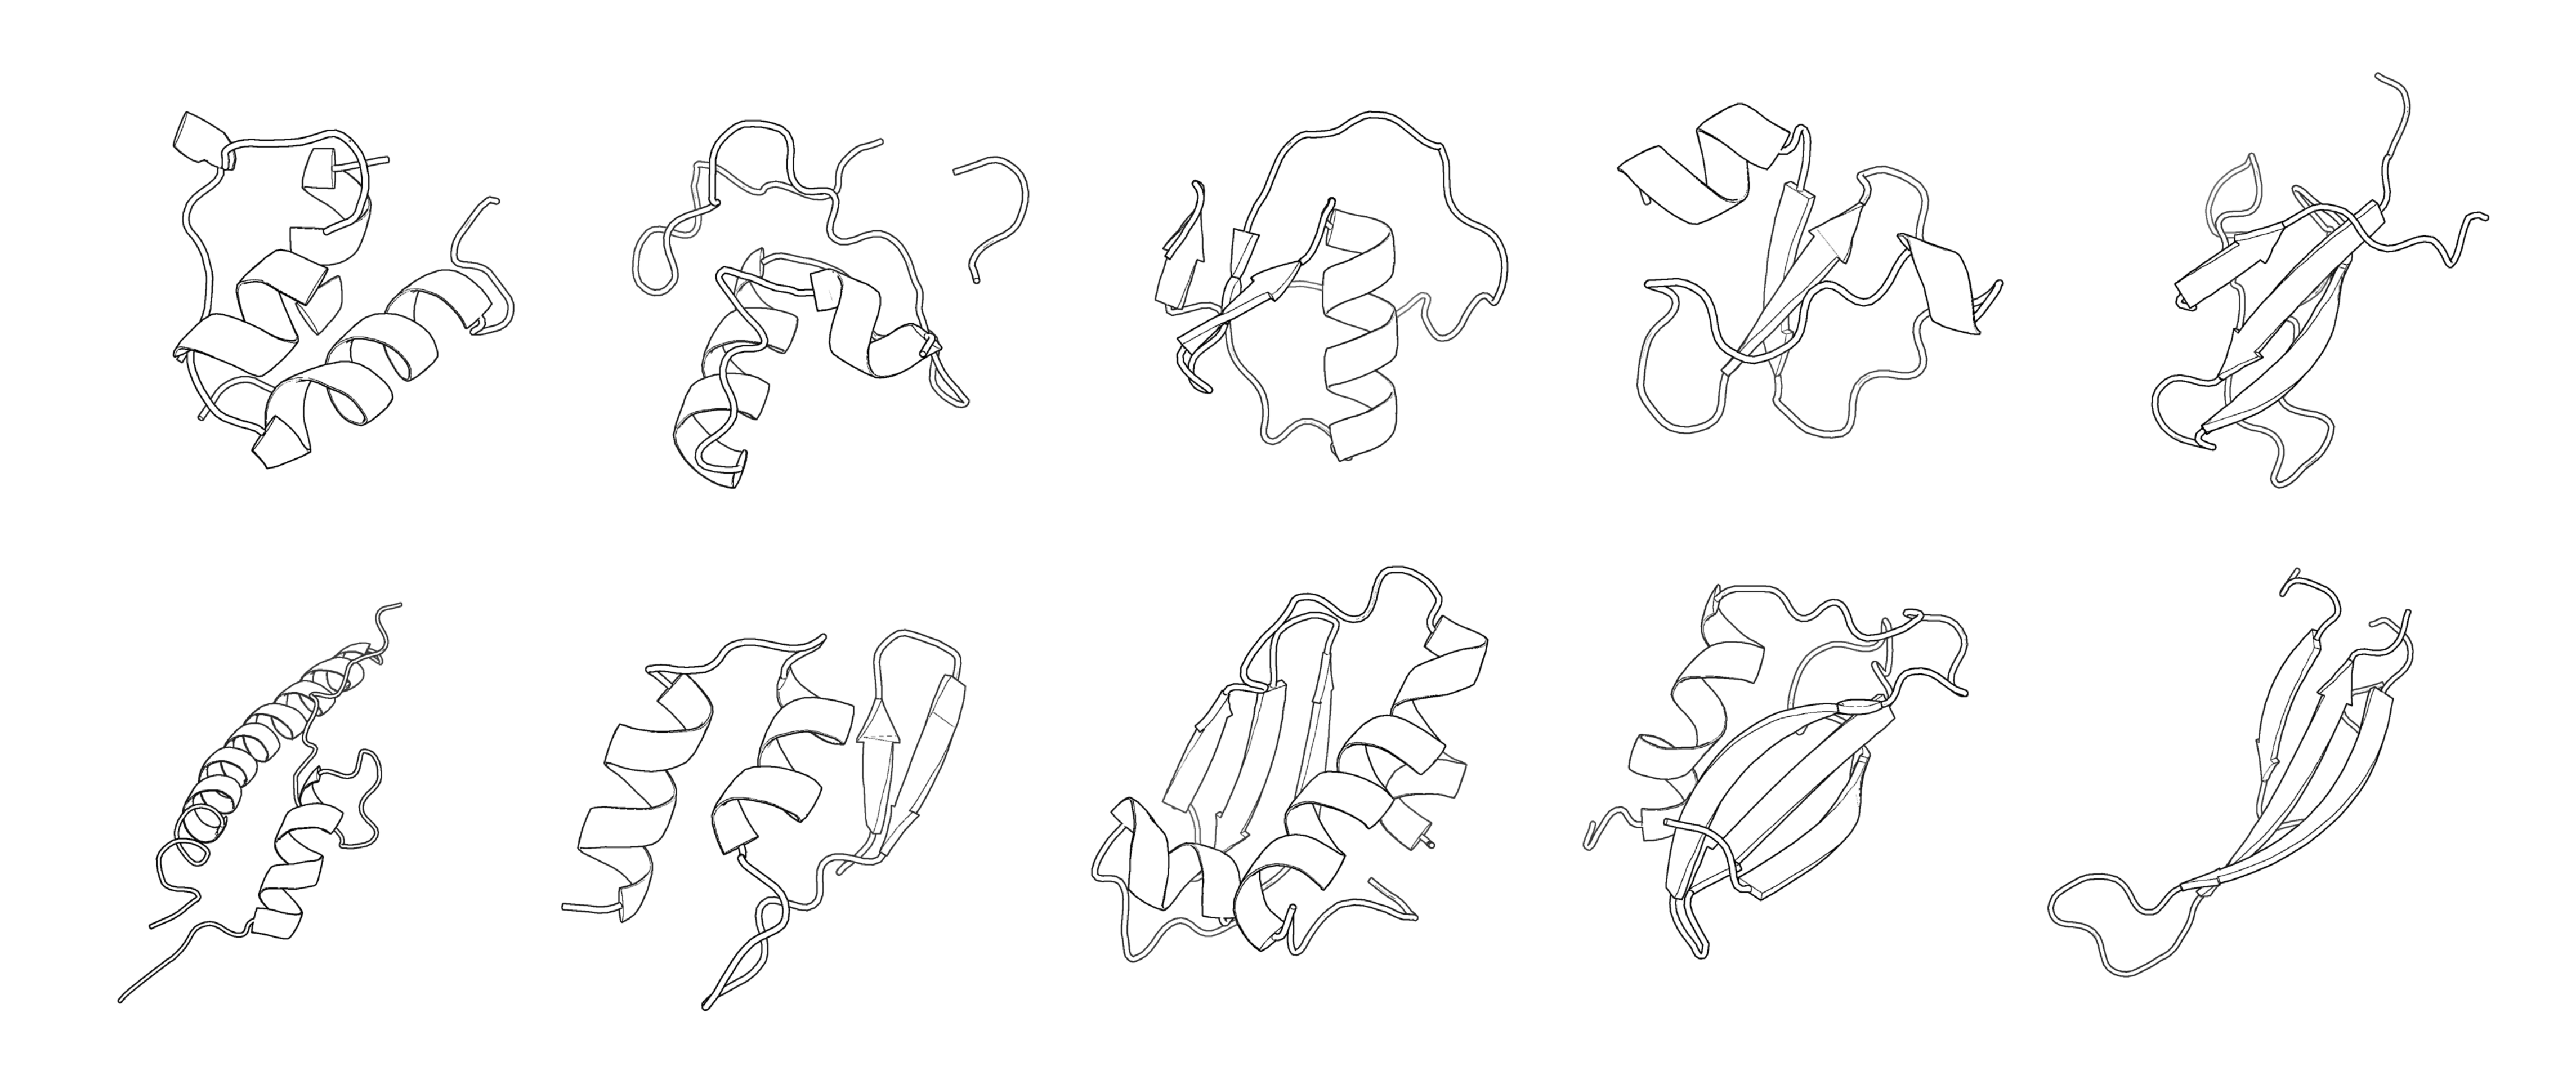 Line drawings of ten proteins